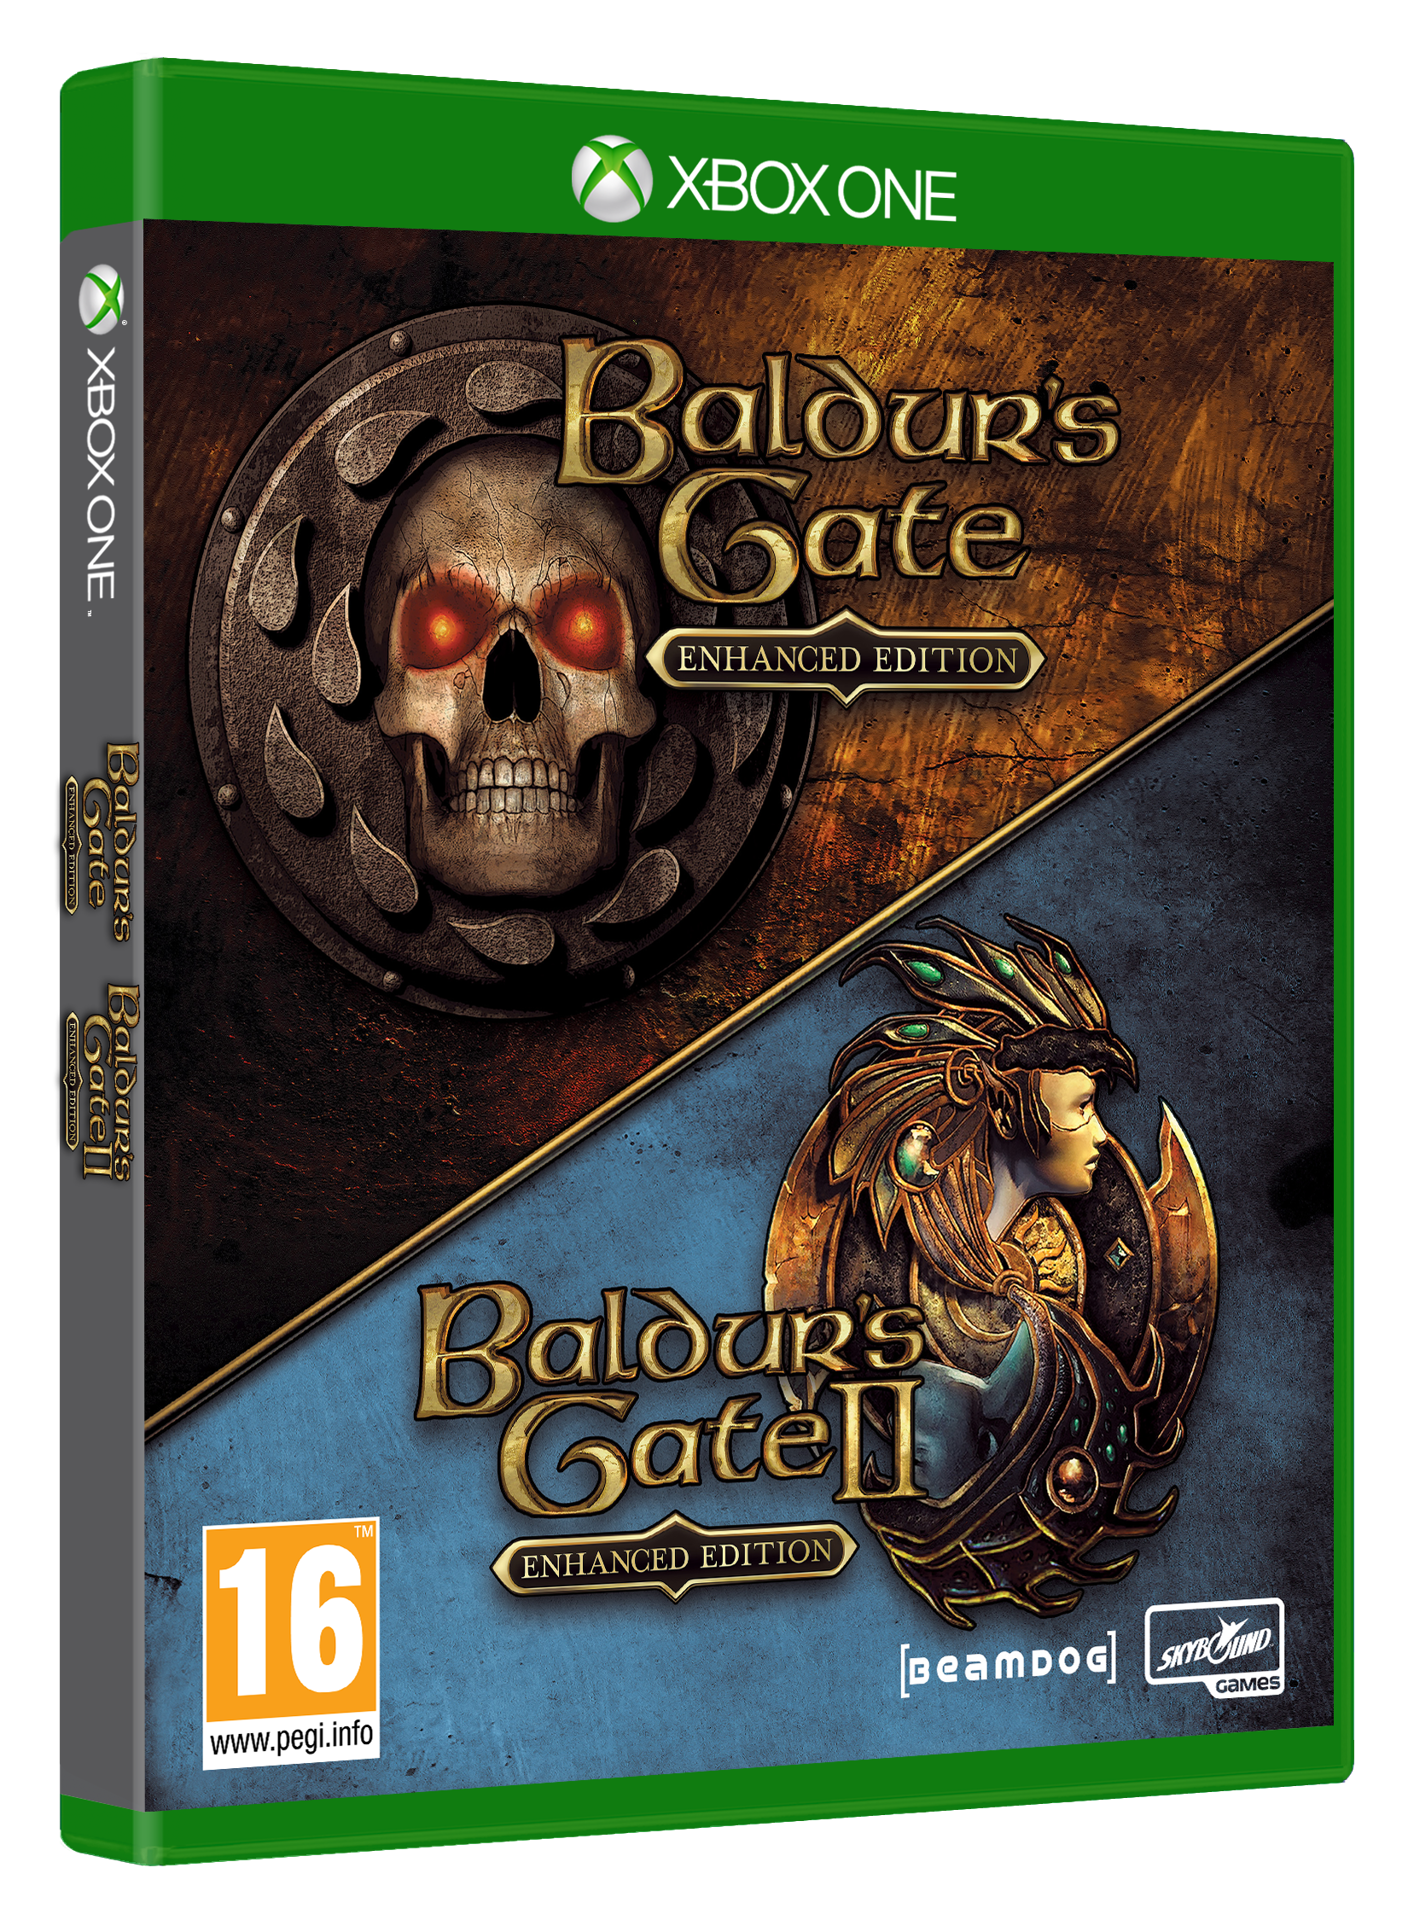 § Baldur's Gate 1+2 Enhanced Edition